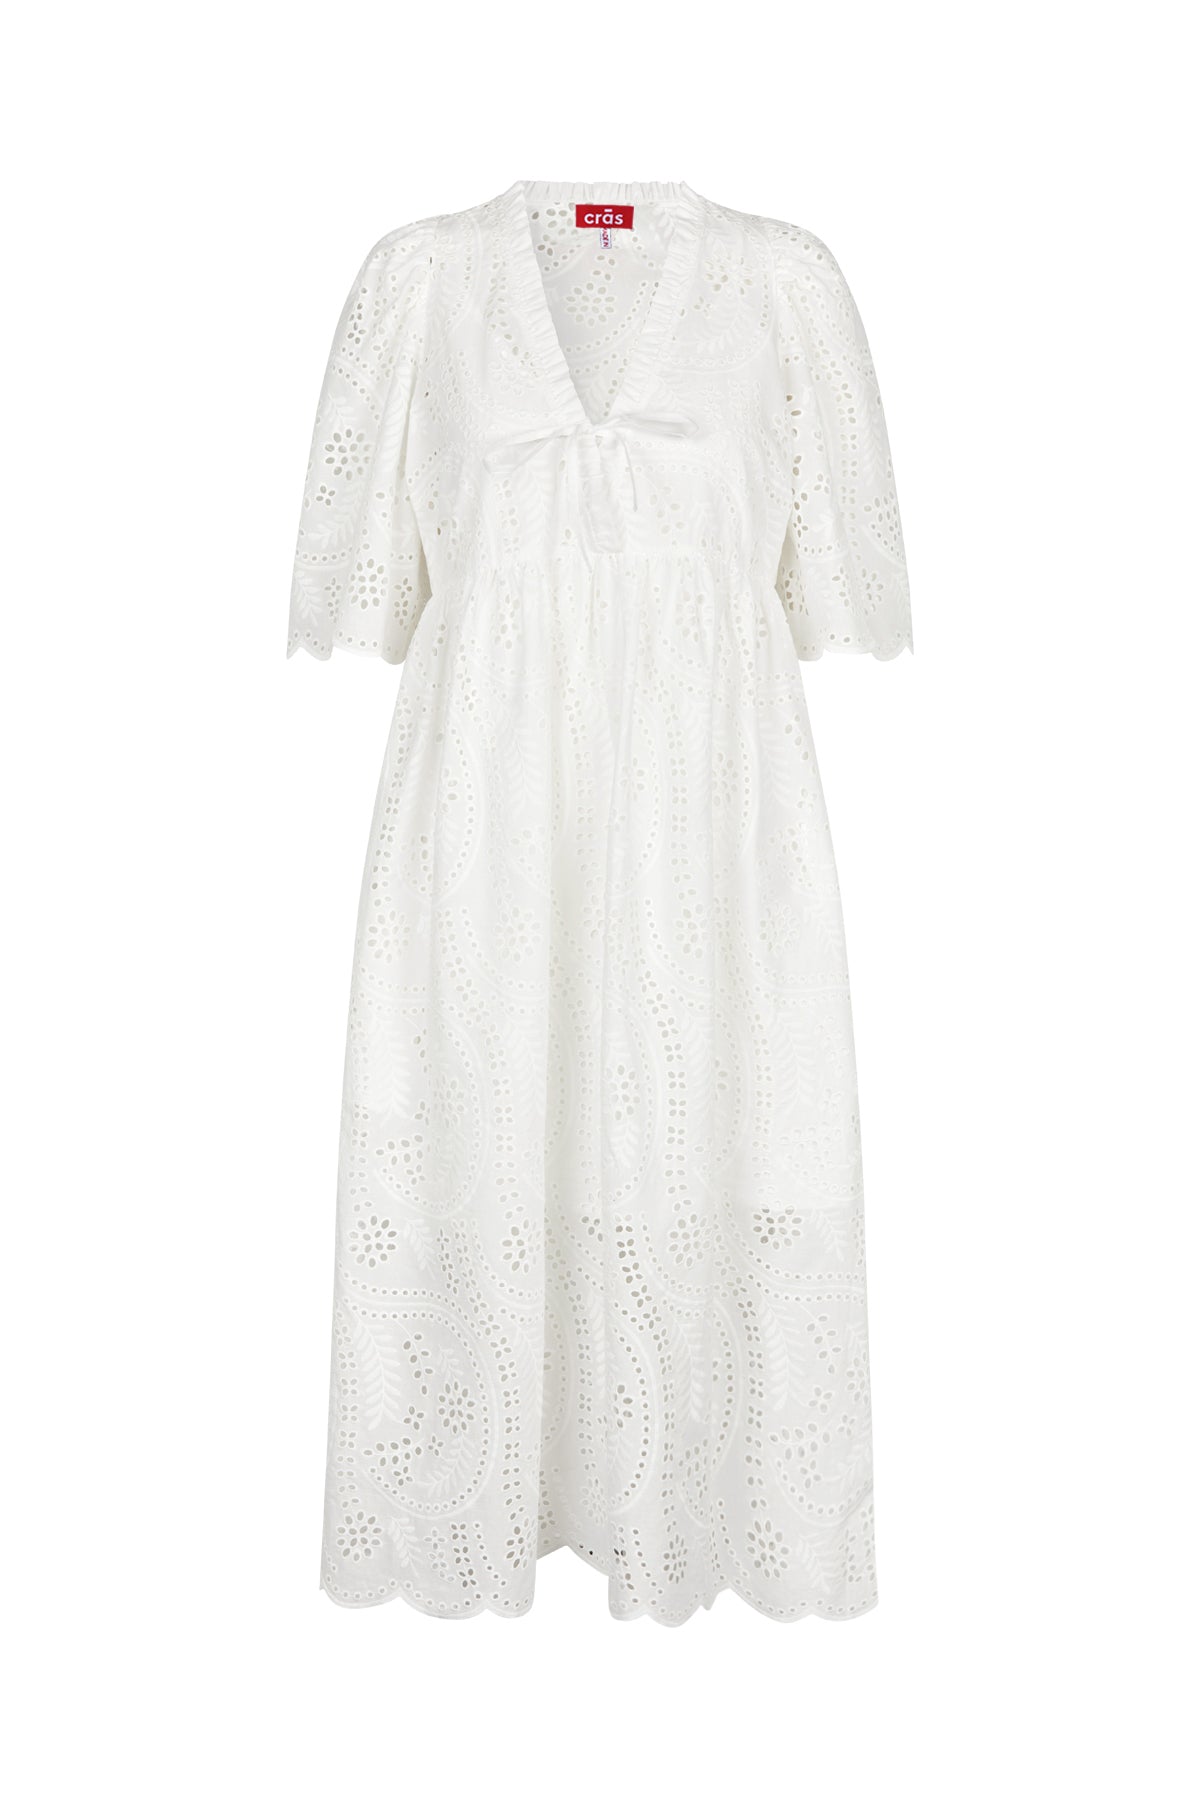 CRAS Breeze Dress Dress 1000 White